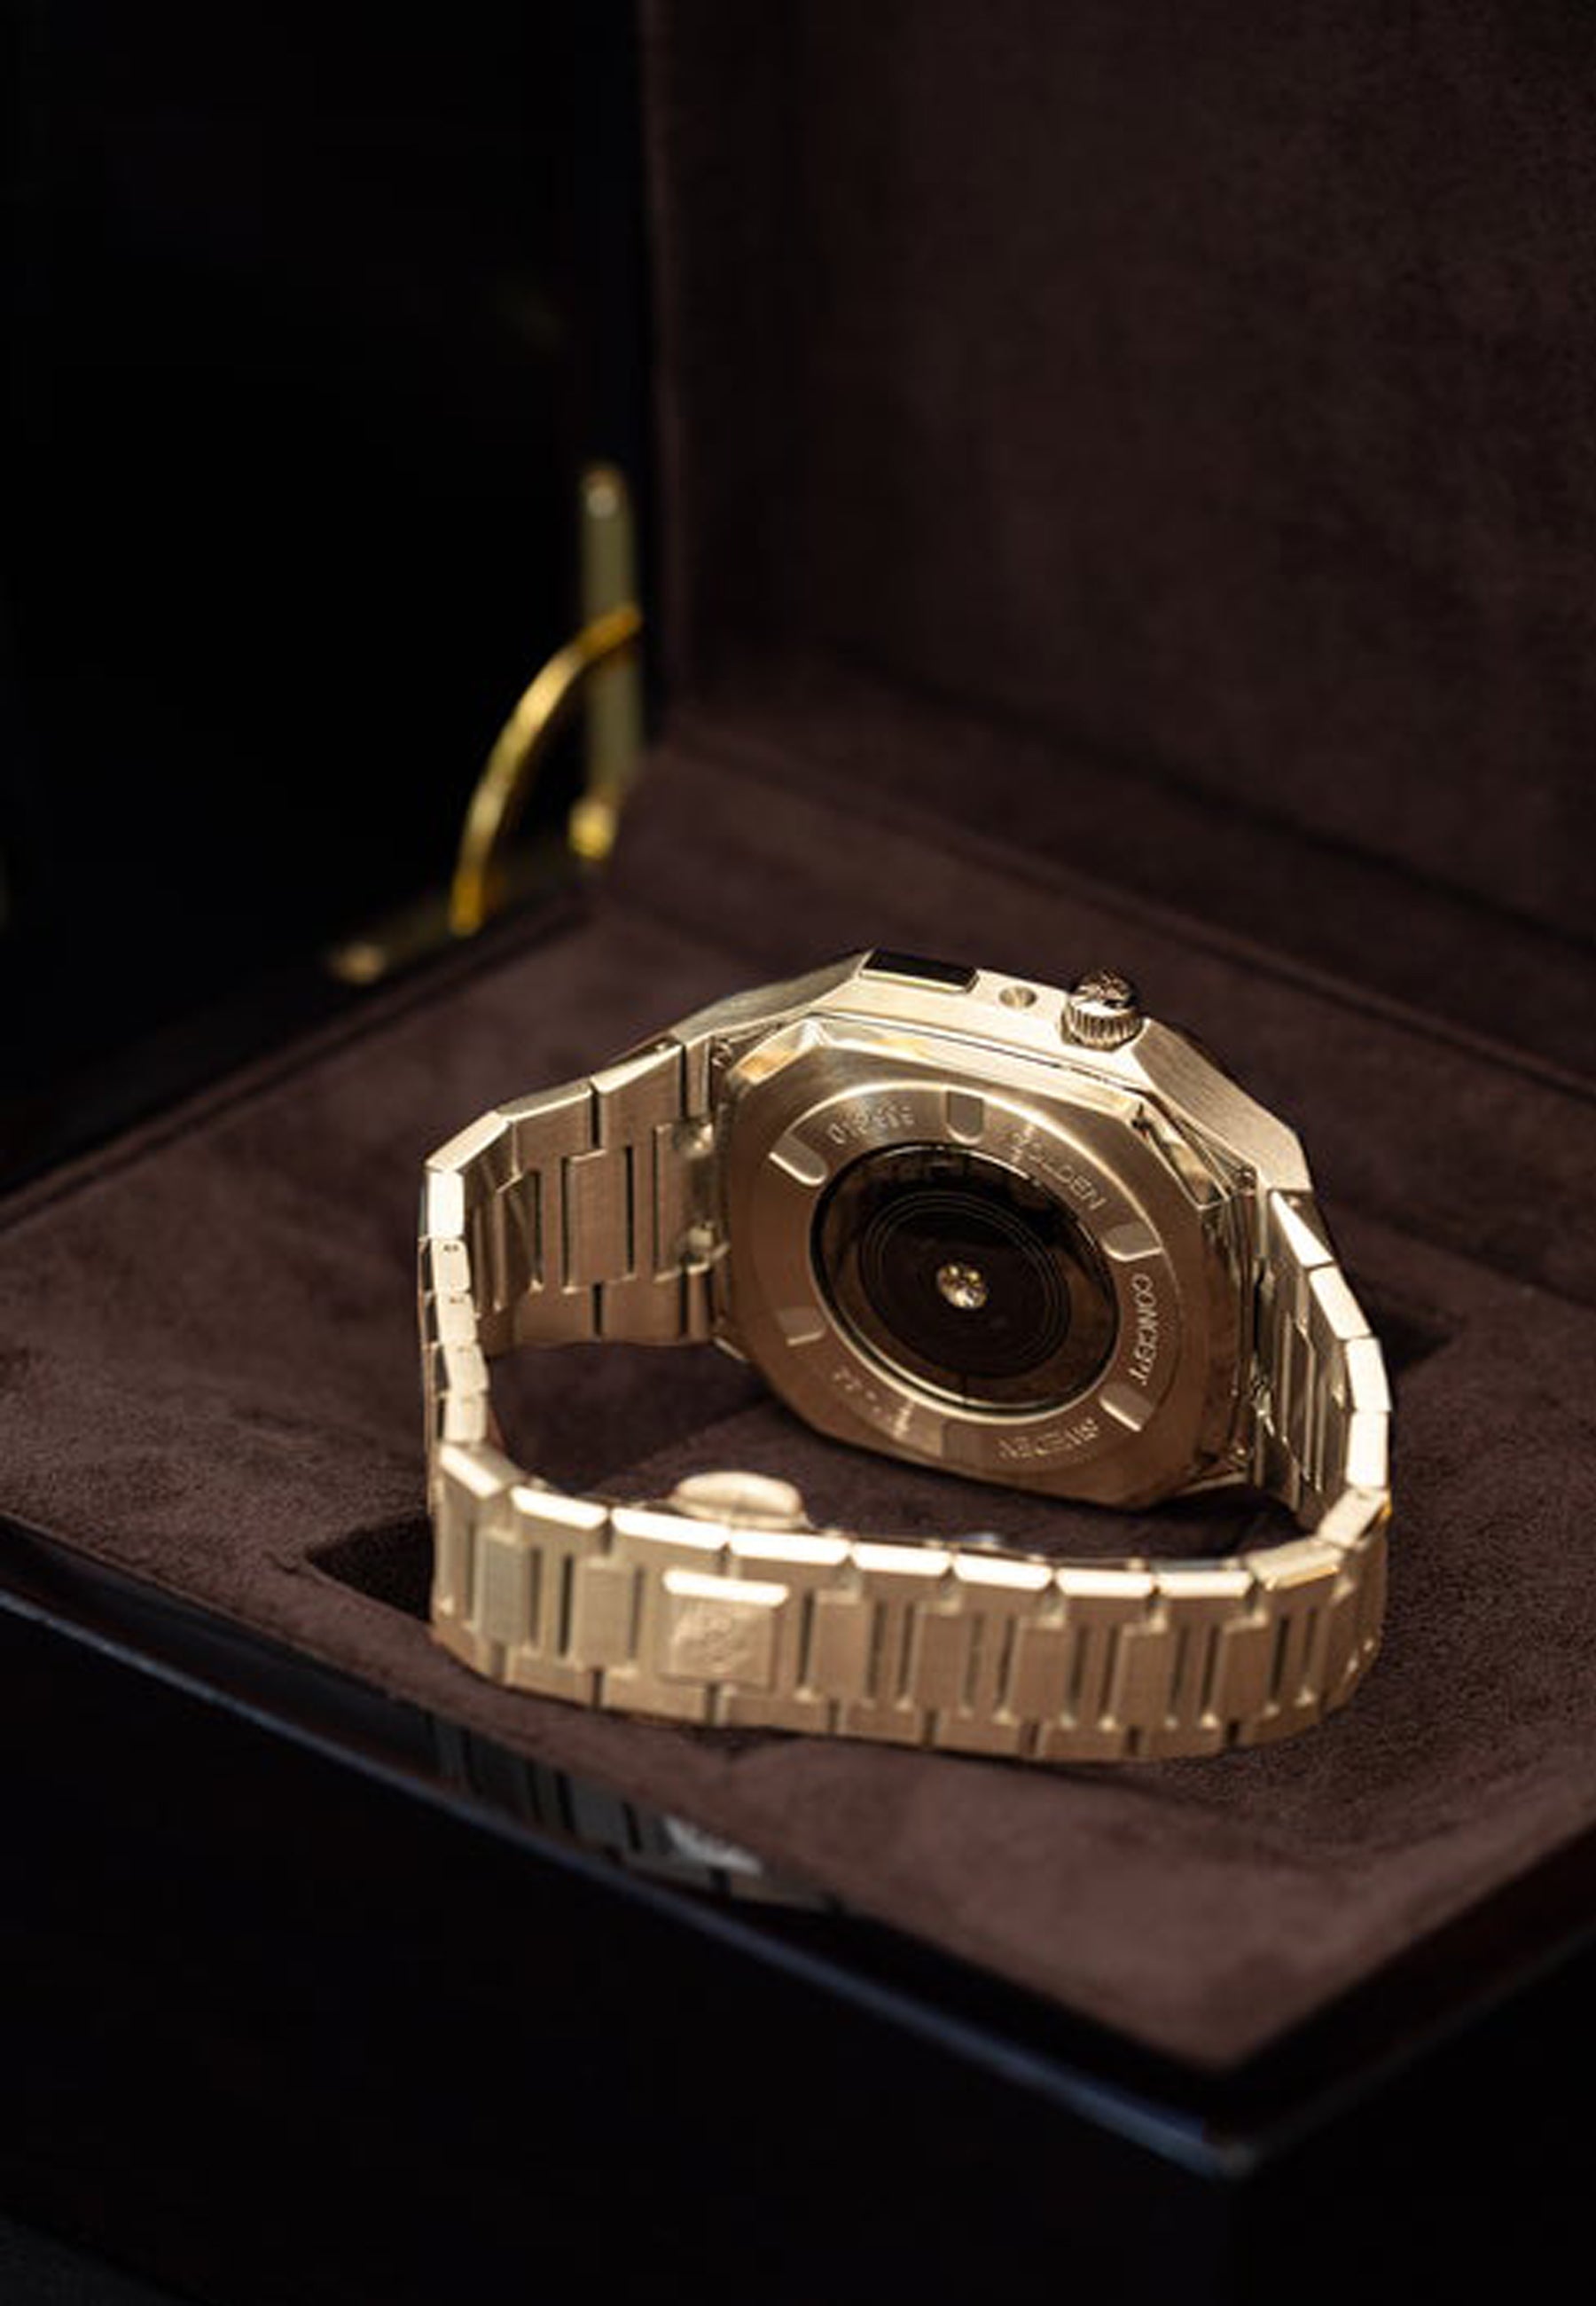 Buy Golden Concept Golden Concept Stainless Steel Case For Apple Watch Series 7 EV41 41MM - Gold Online